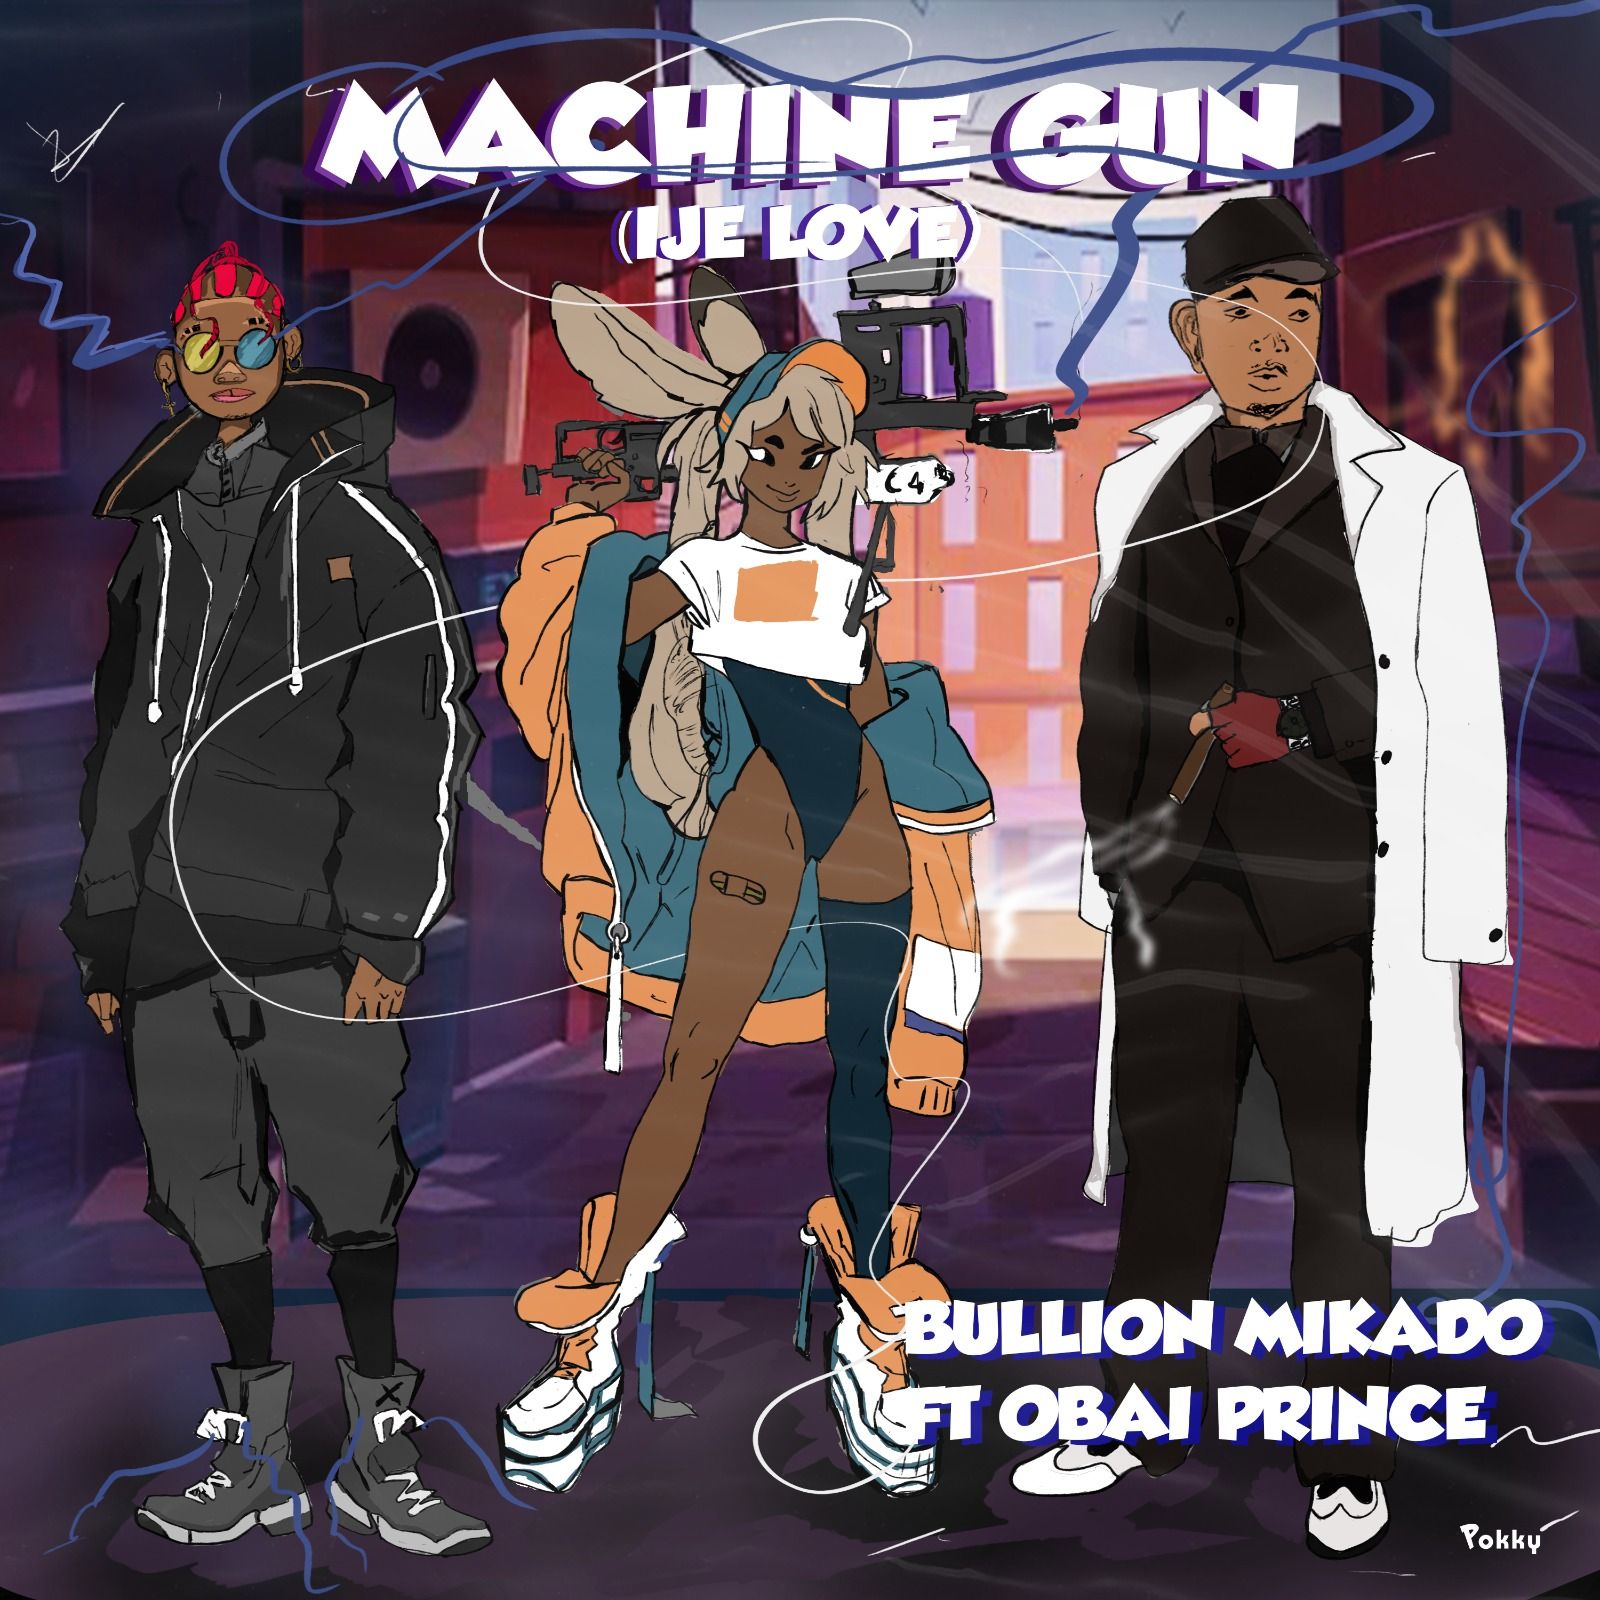 Bullion Mikado - Machine Gun (Ije Love) Ft. Obai Prince